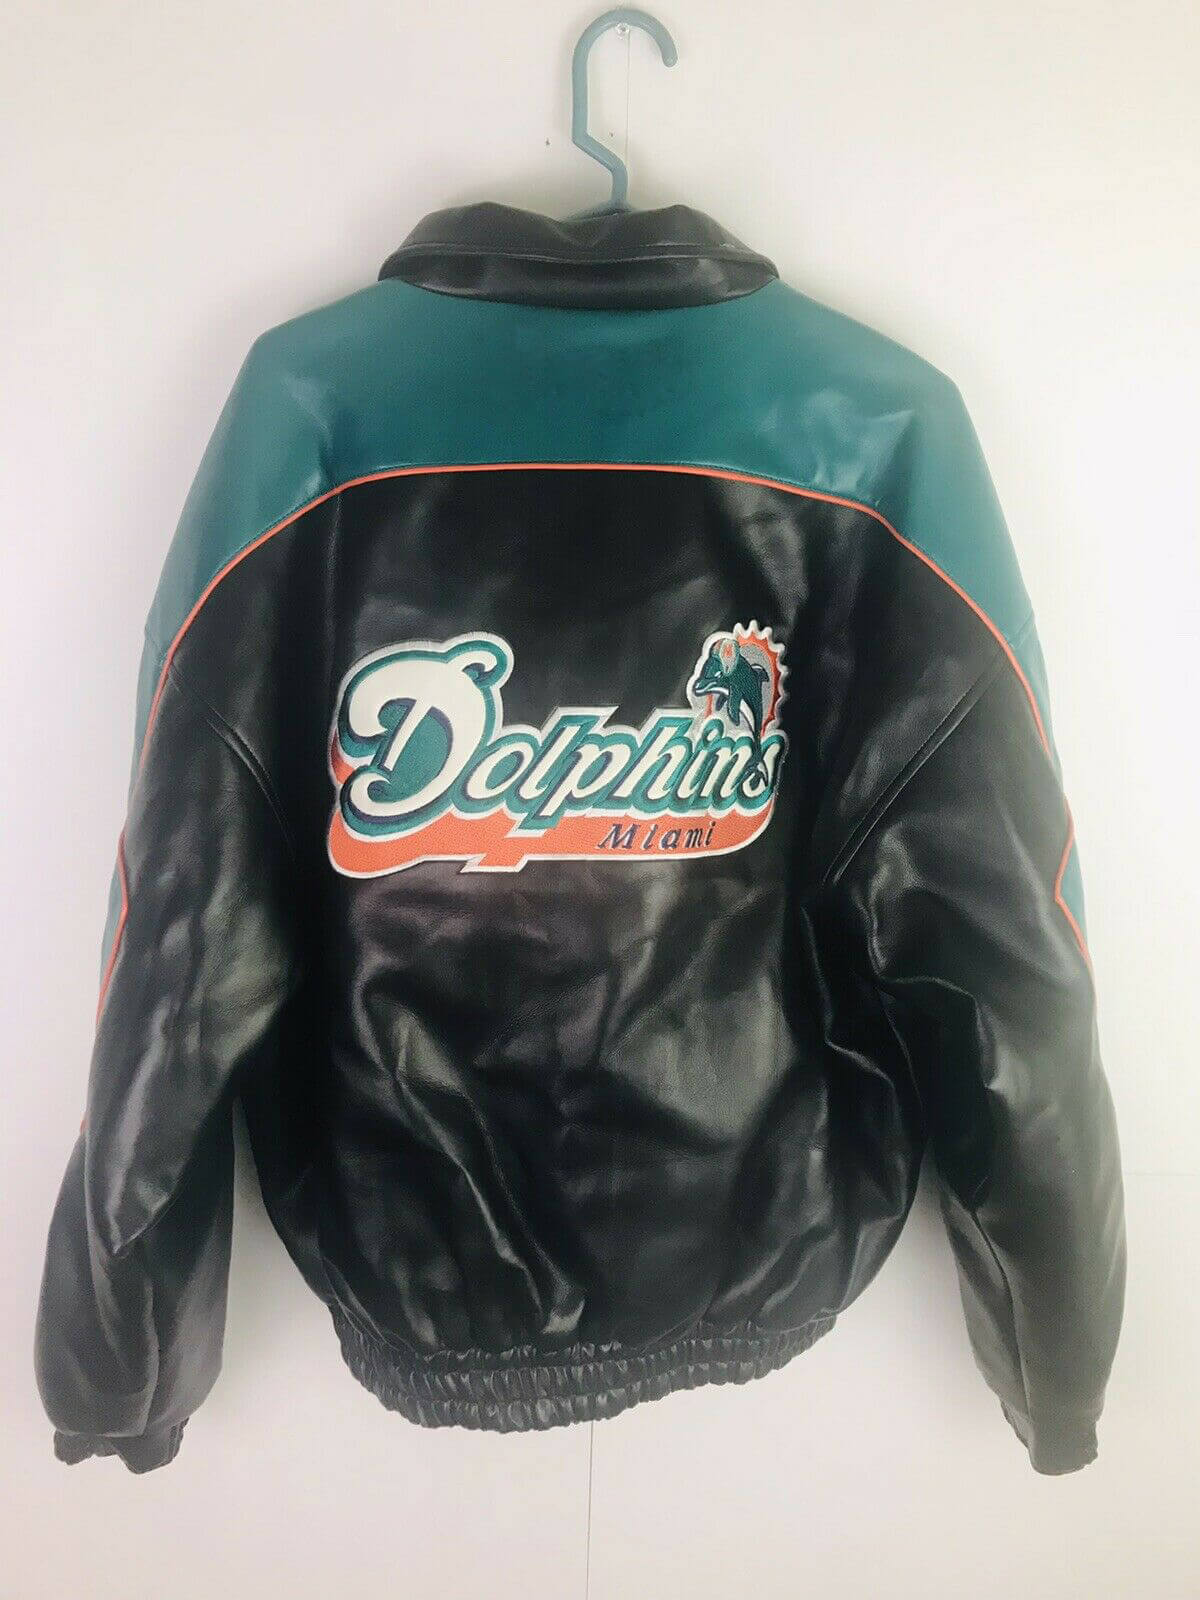 Maker of Jacket Black Leather Jackets Vintage Pro Player NFL Miami Dolphins